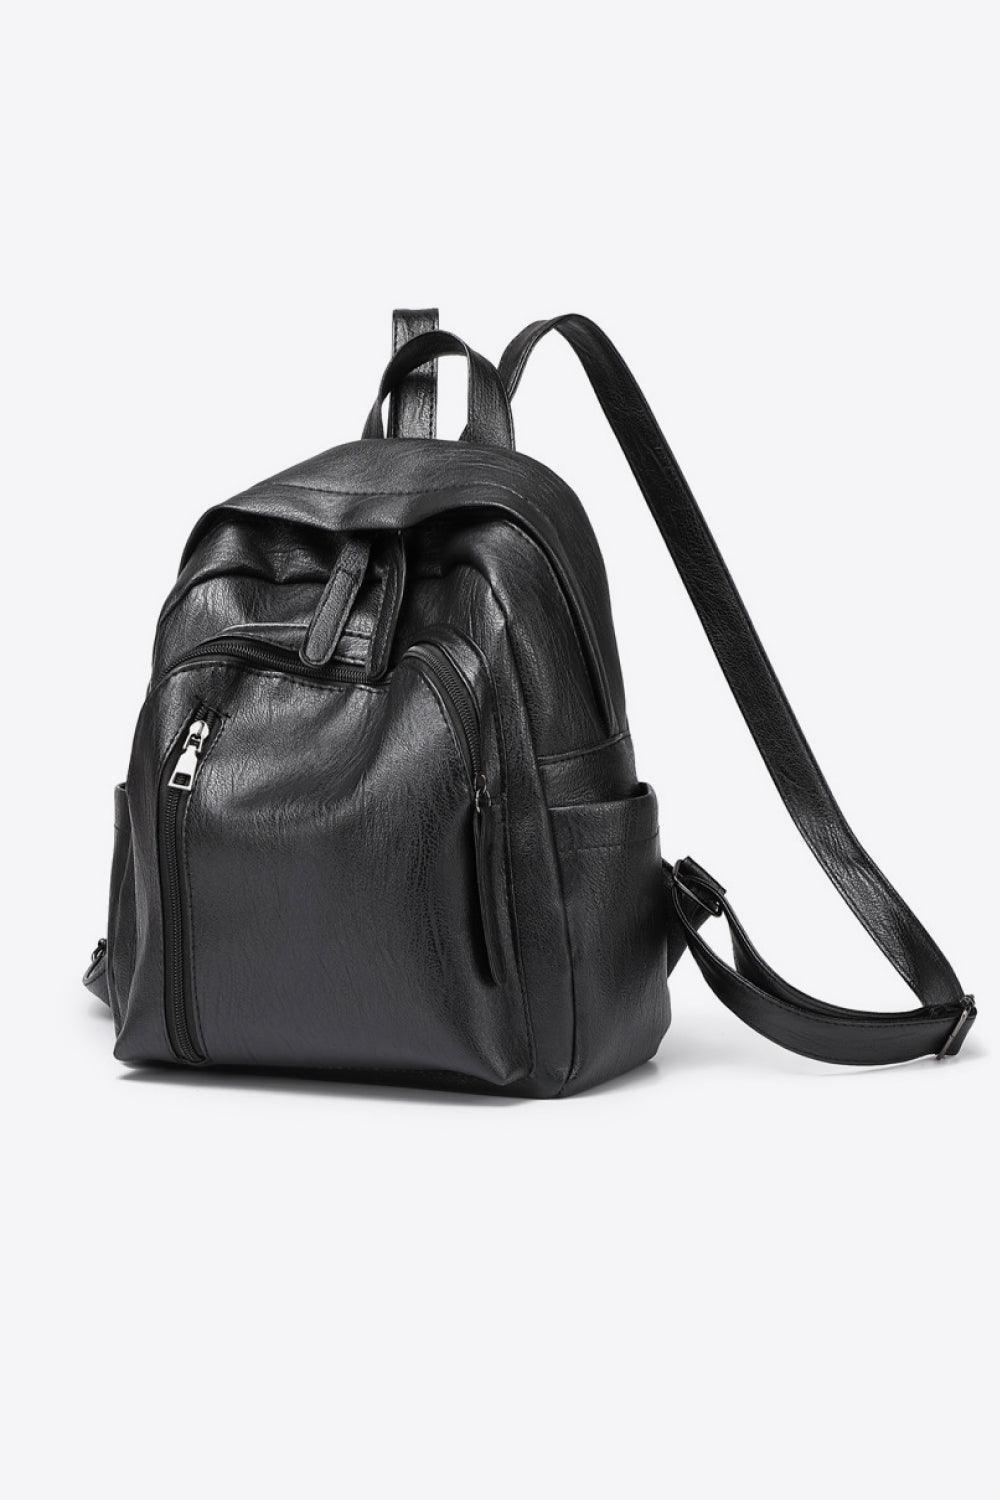 Large Capacity PU Leather Women's Black Backpack - MXSTUDIO.COM